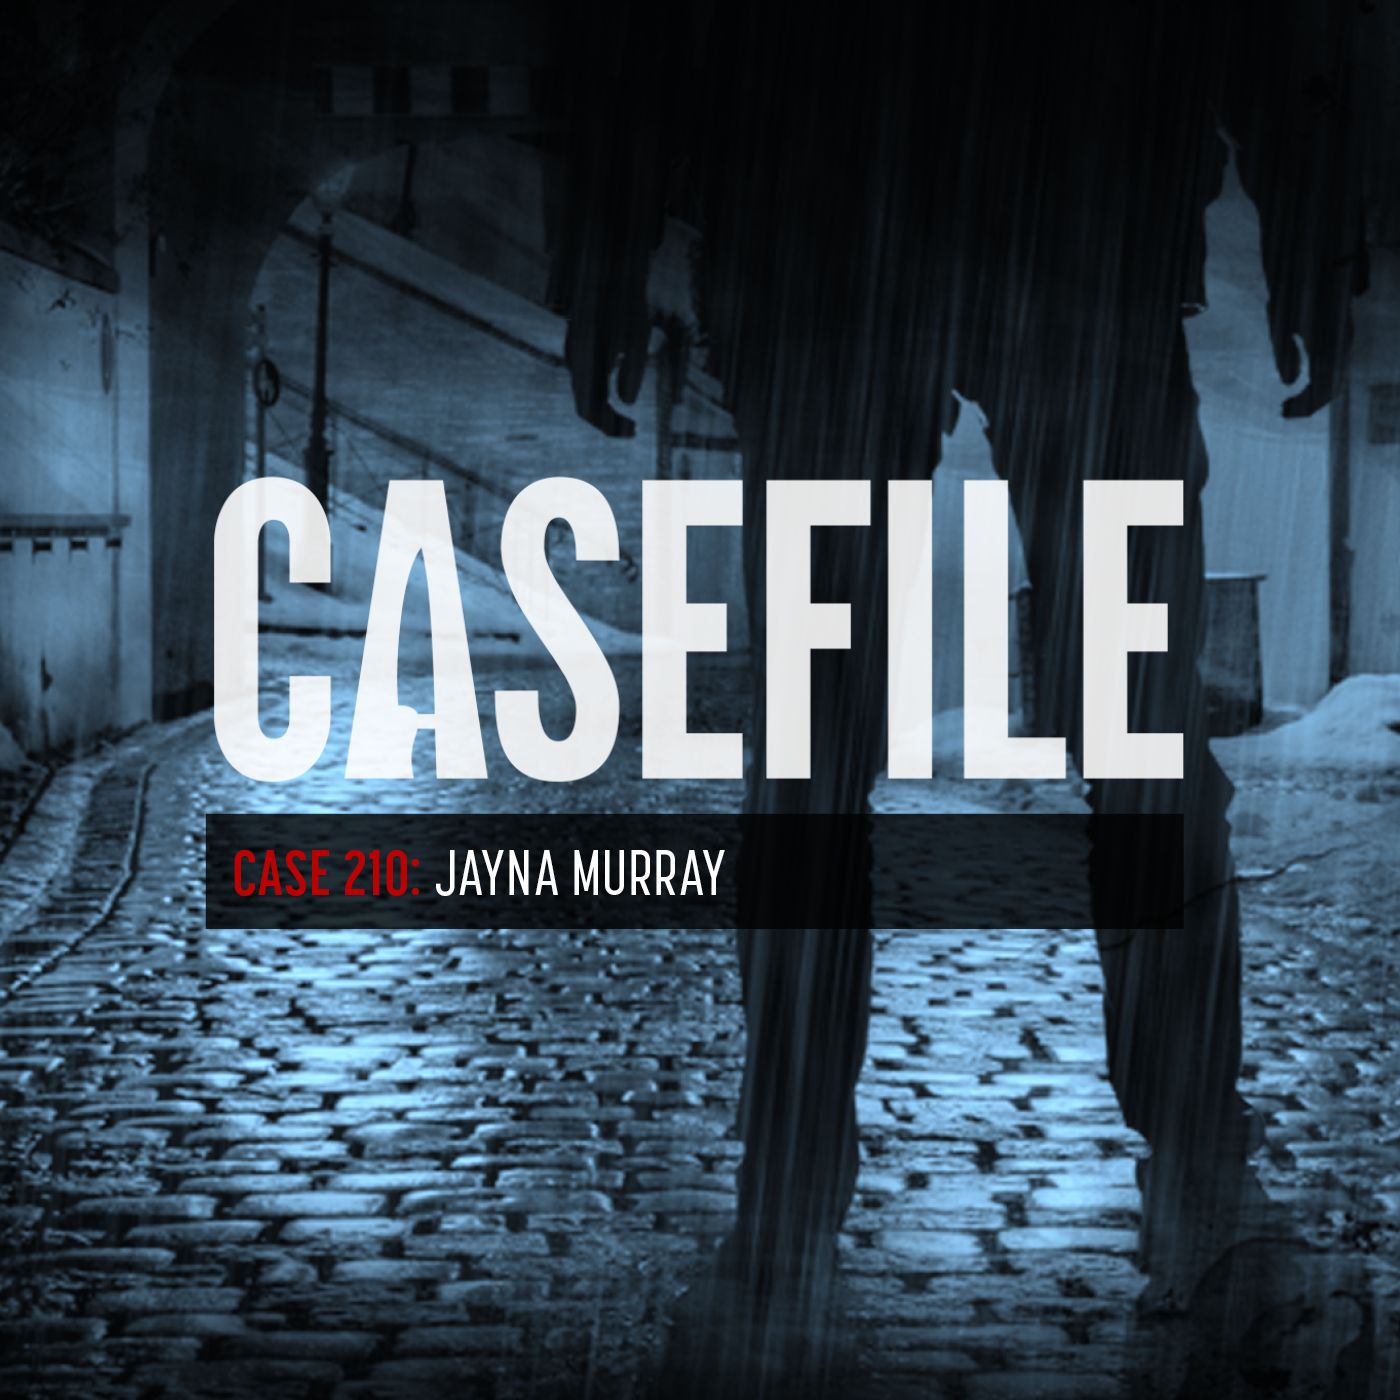 Case 210: Jayna Murray